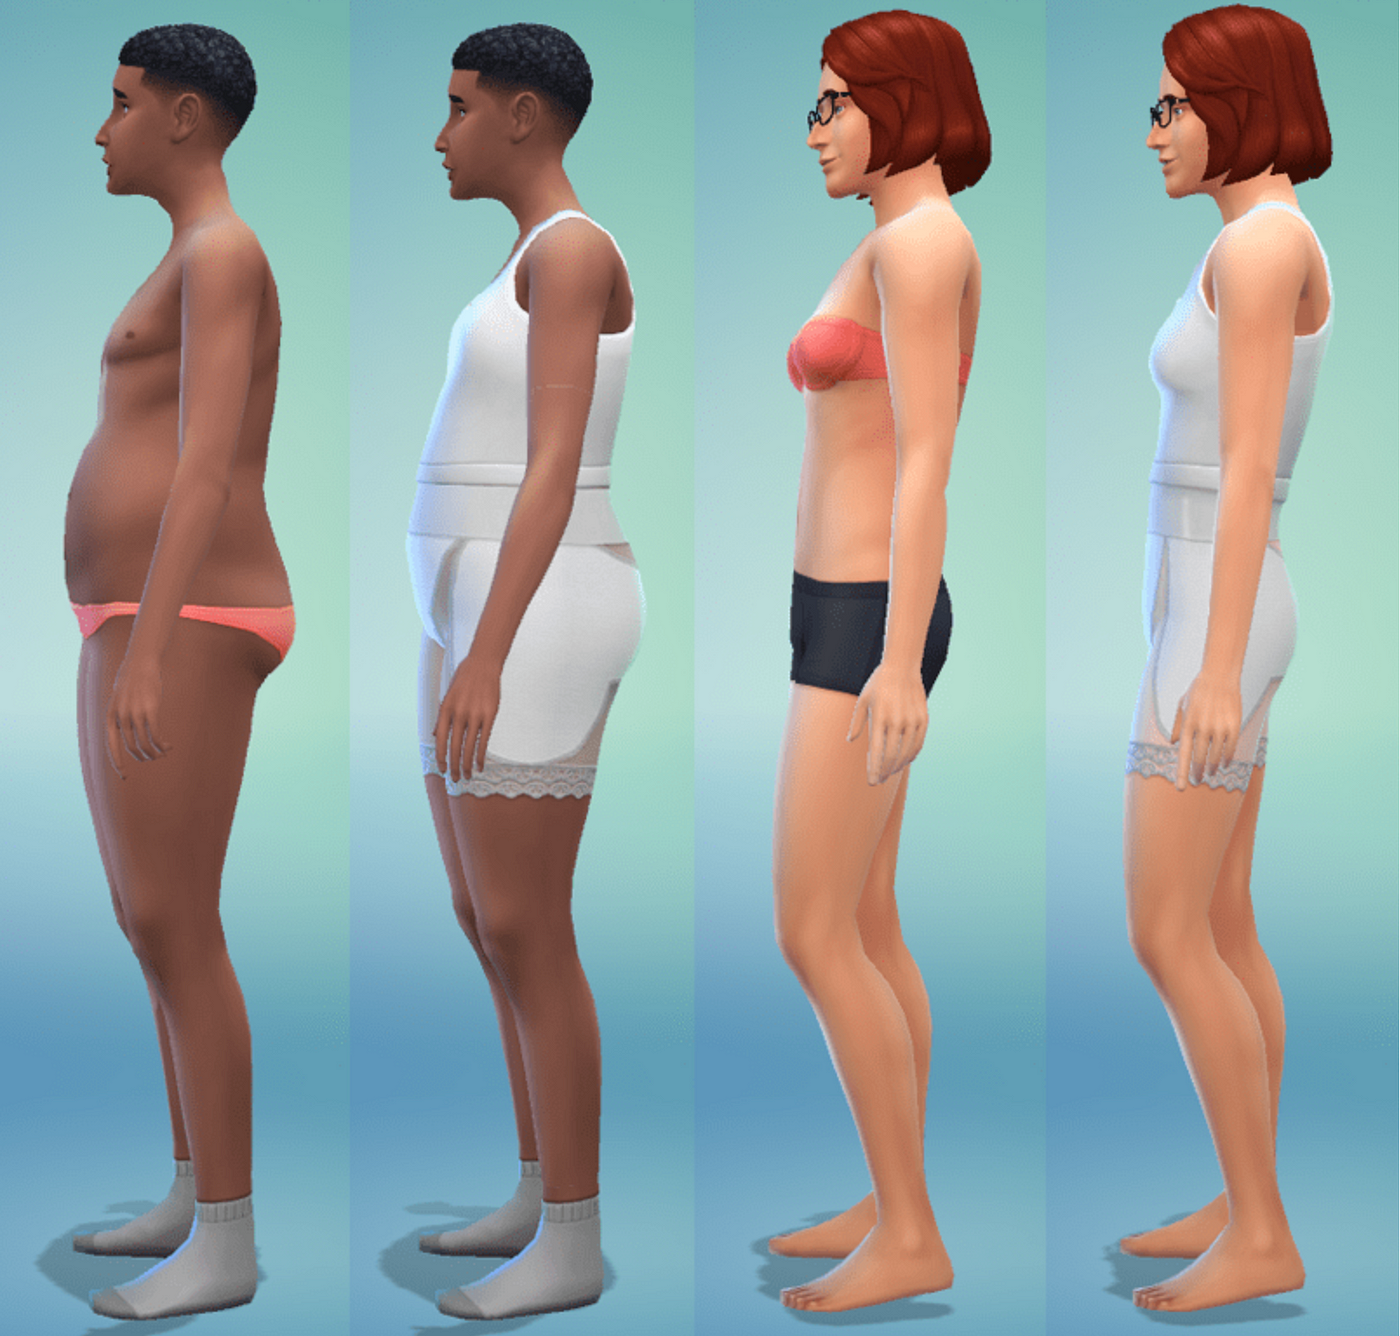 Sims 4 update include Transgender customisation-good or bad